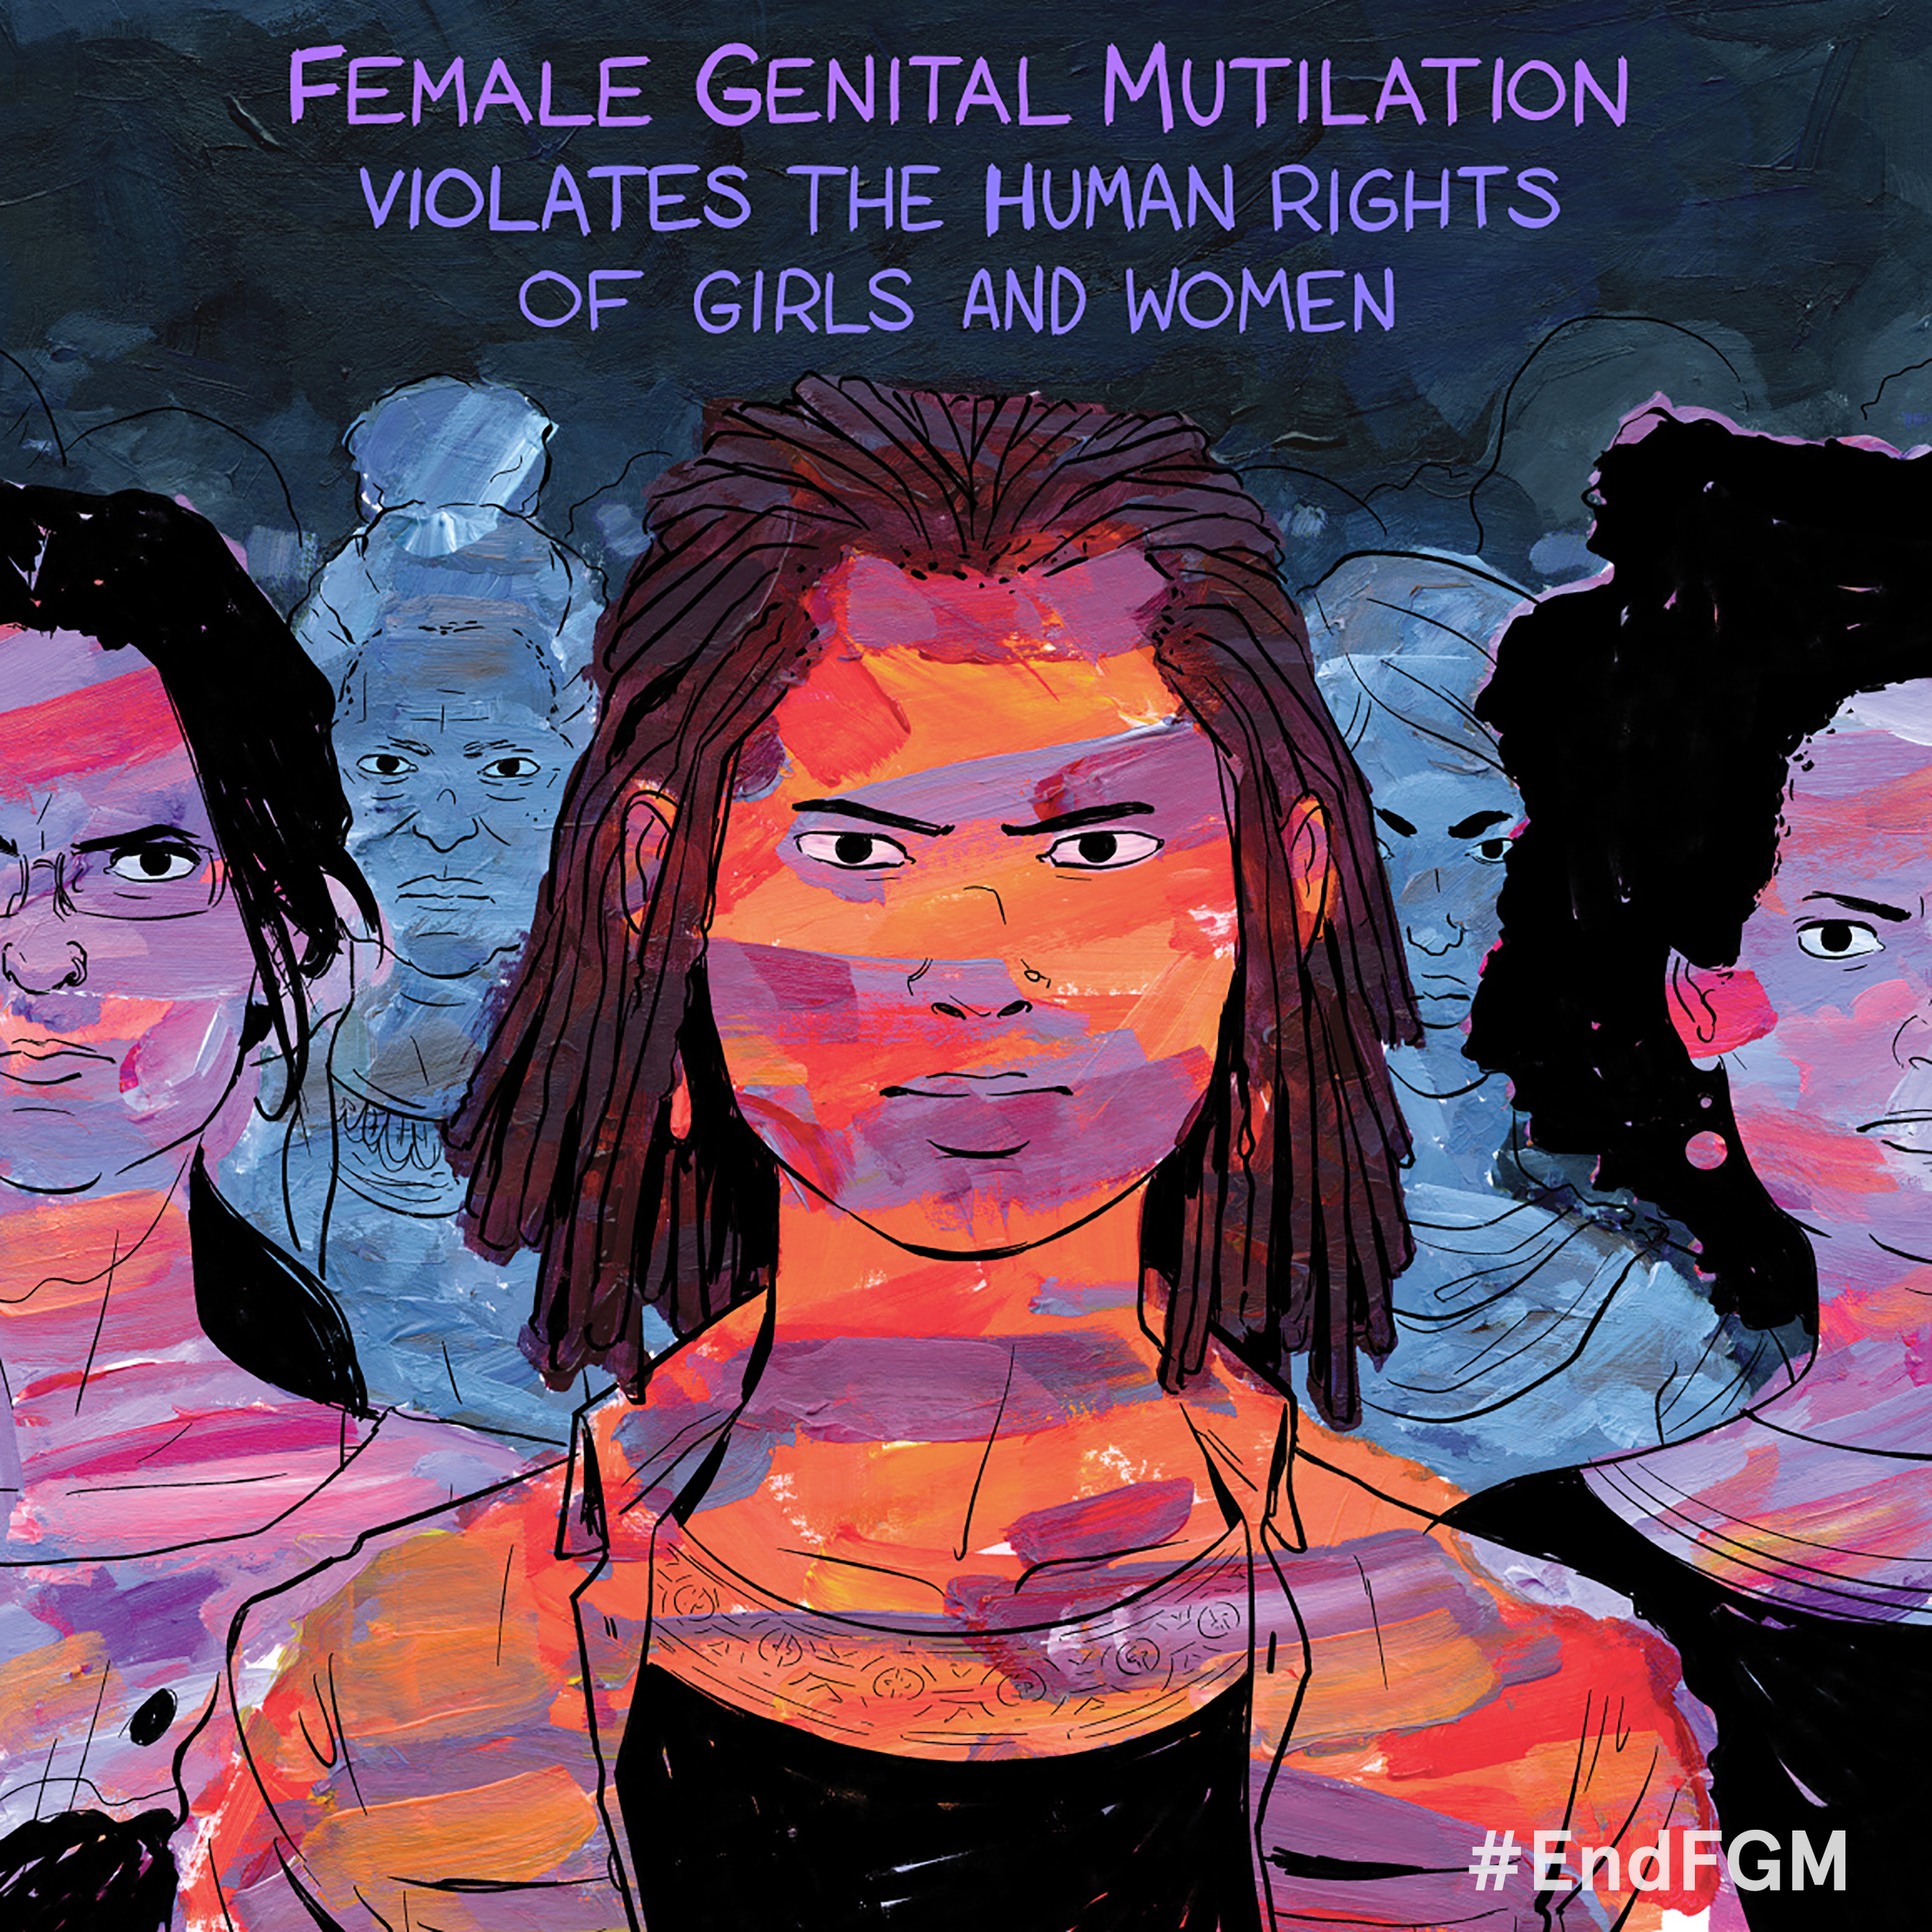 FGM Image8 Watermark.png